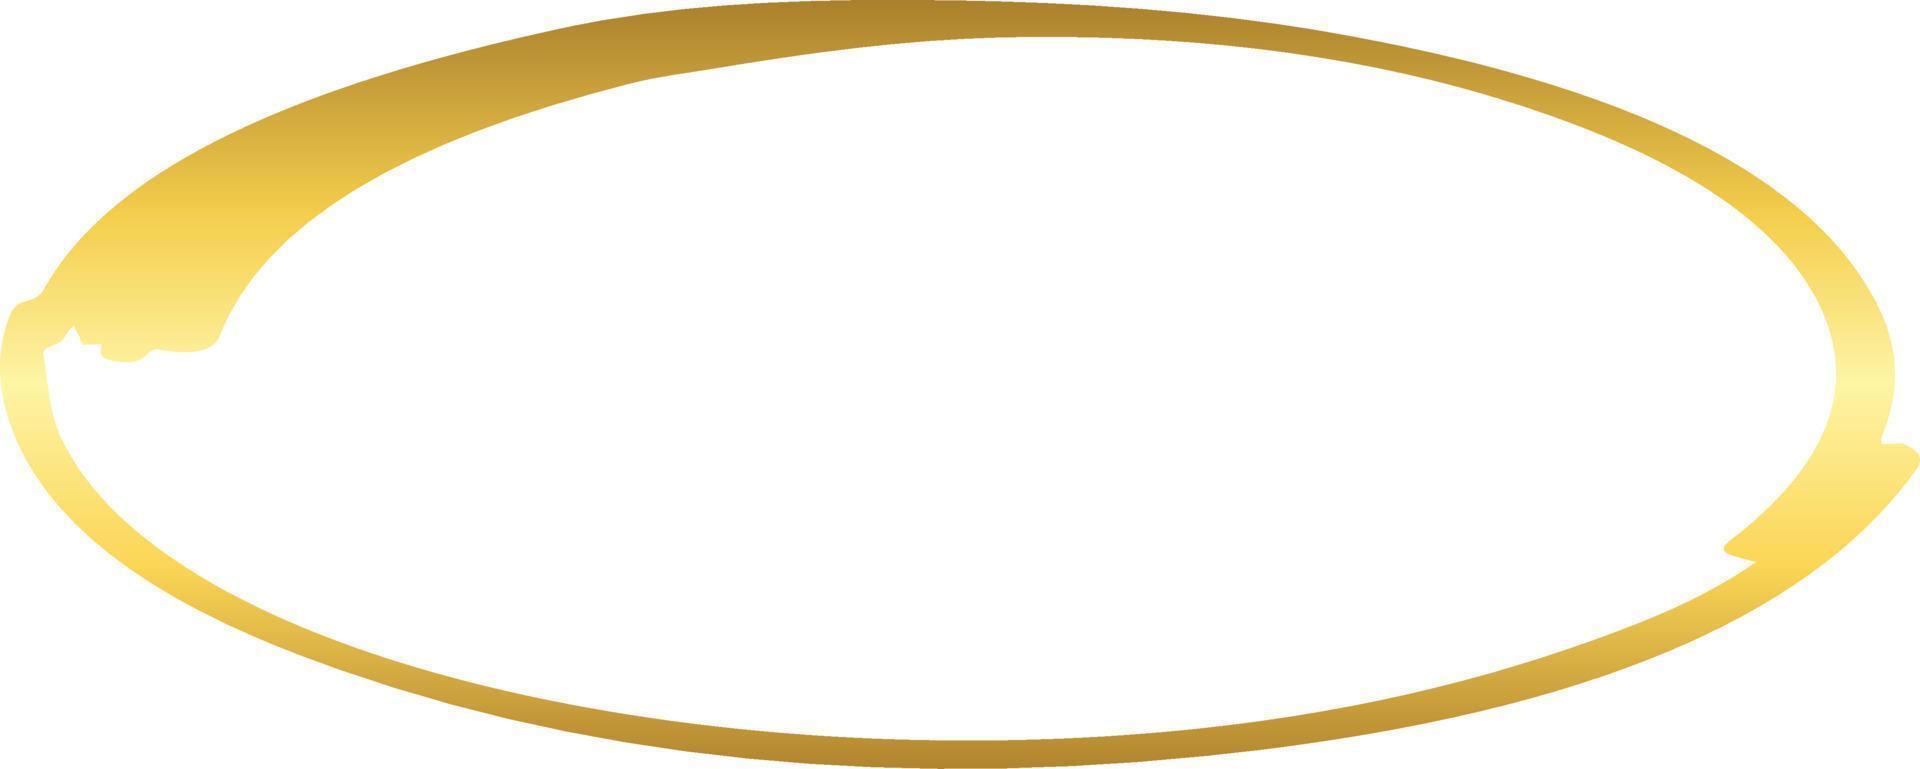 oval guld borsta stroke design element vektor